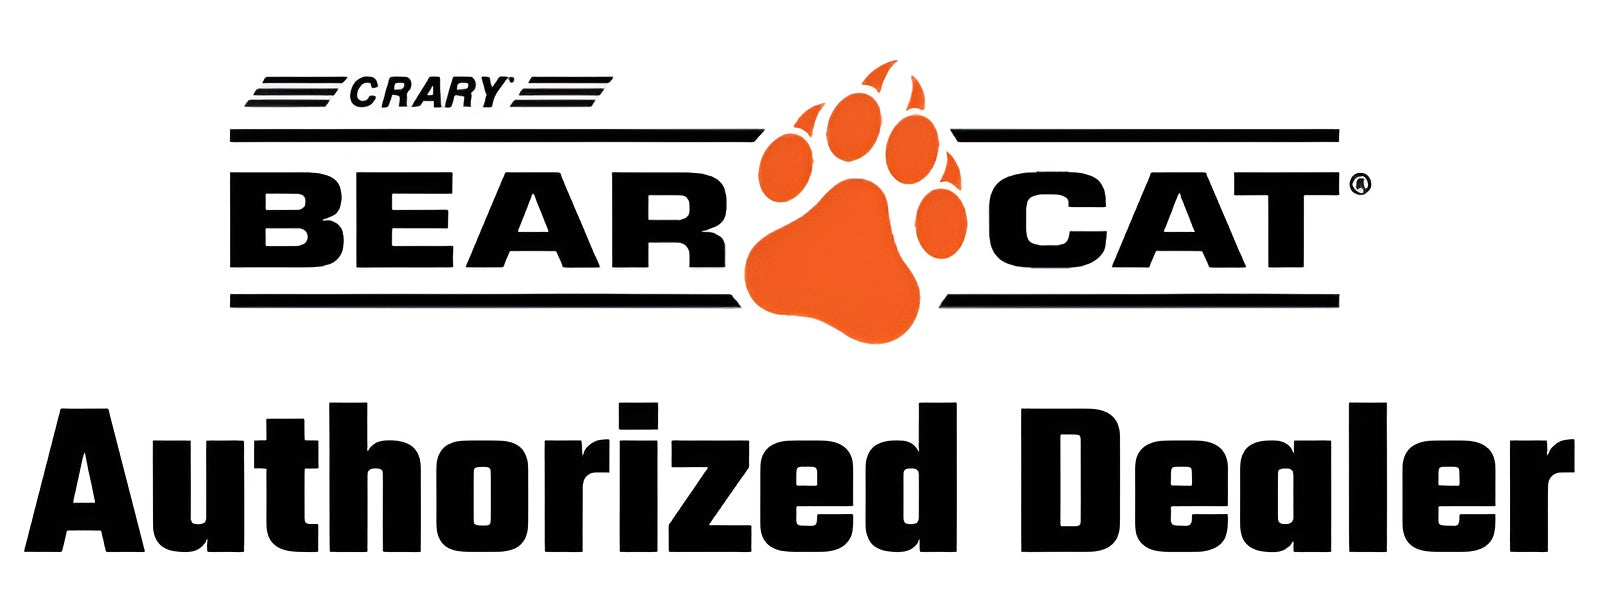 Crary Bear Cat Authorized Dealer